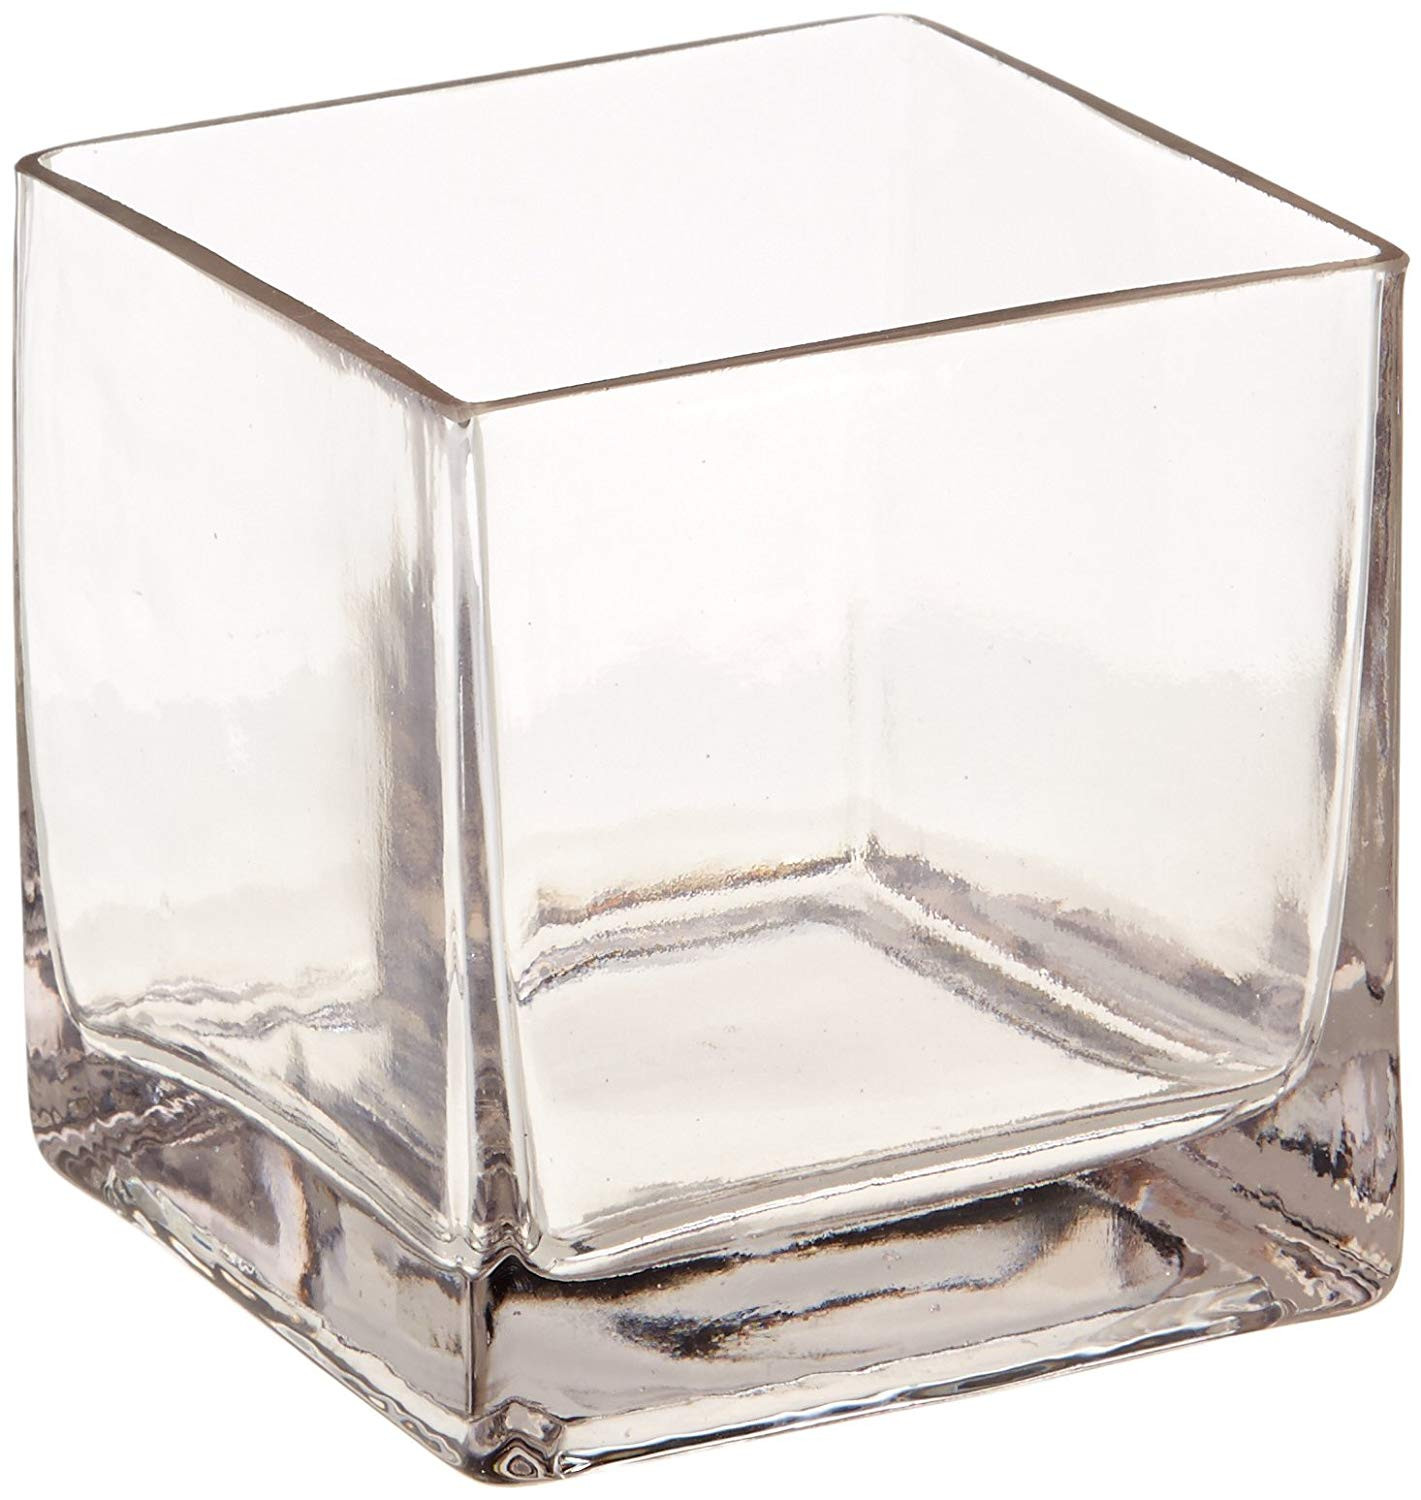 18 Ideal 6 Inch Crystal Vase 2024 free download 6 inch crystal vase of amazon com 12piece 4 square crystal clear glass vase home kitchen inside 71 jezfmvnl sl1500